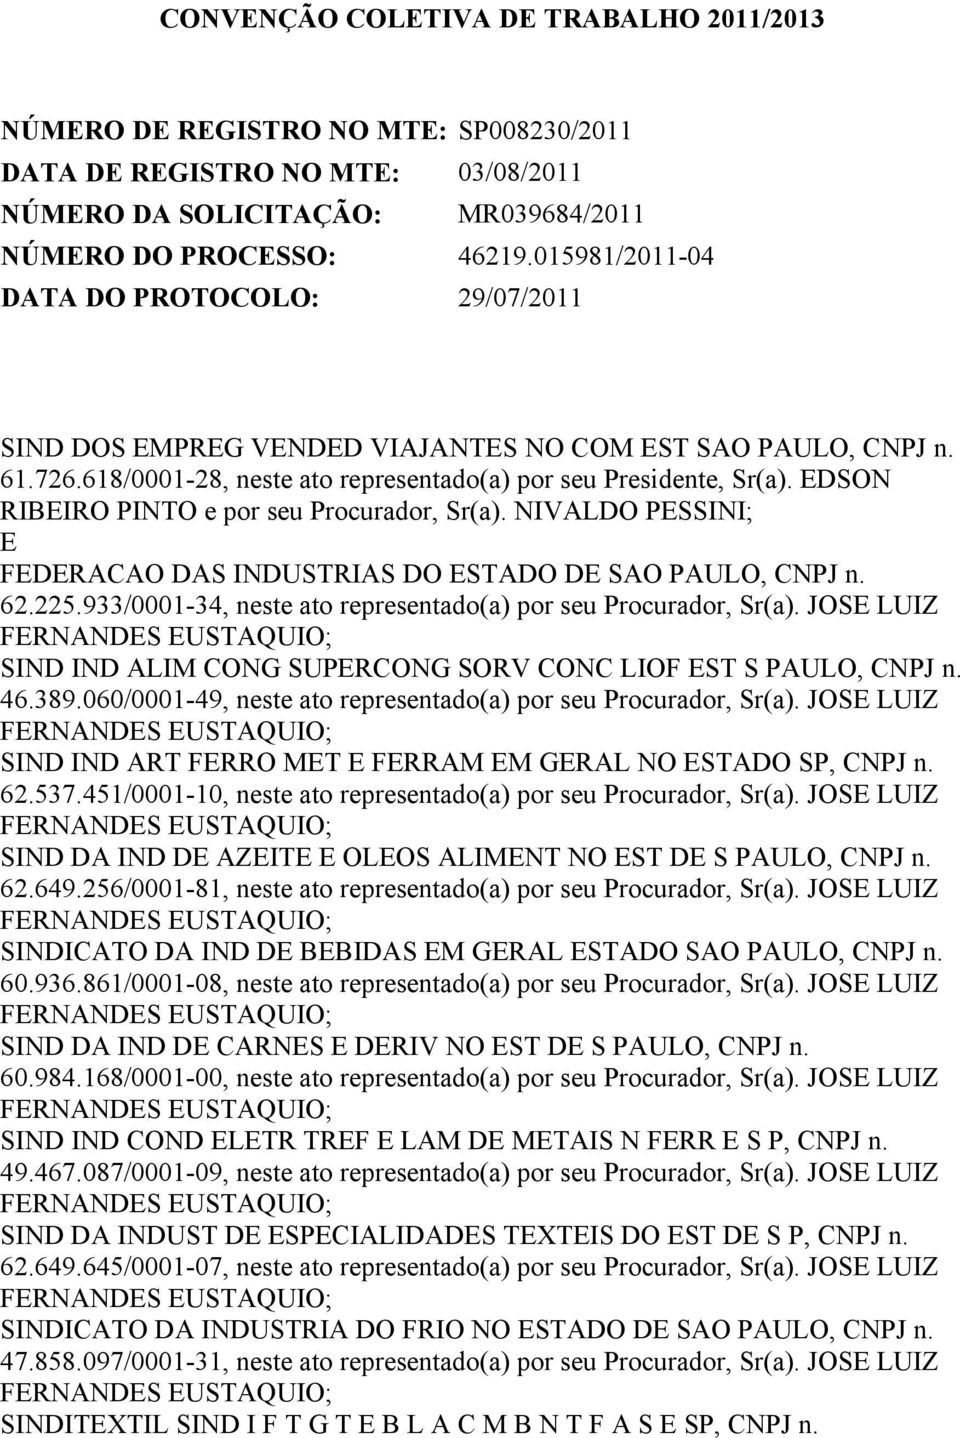 EDSON RIBEIRO PINTO e por seu, Sr(a). NIVALDO PESSINI; E FEDERACAO DAS INDUSTRIAS DO ESTADO DE SAO PAULO, CNPJ n. 62.225.933/0001-34, neste ato representado(a) por seu, Sr(a).